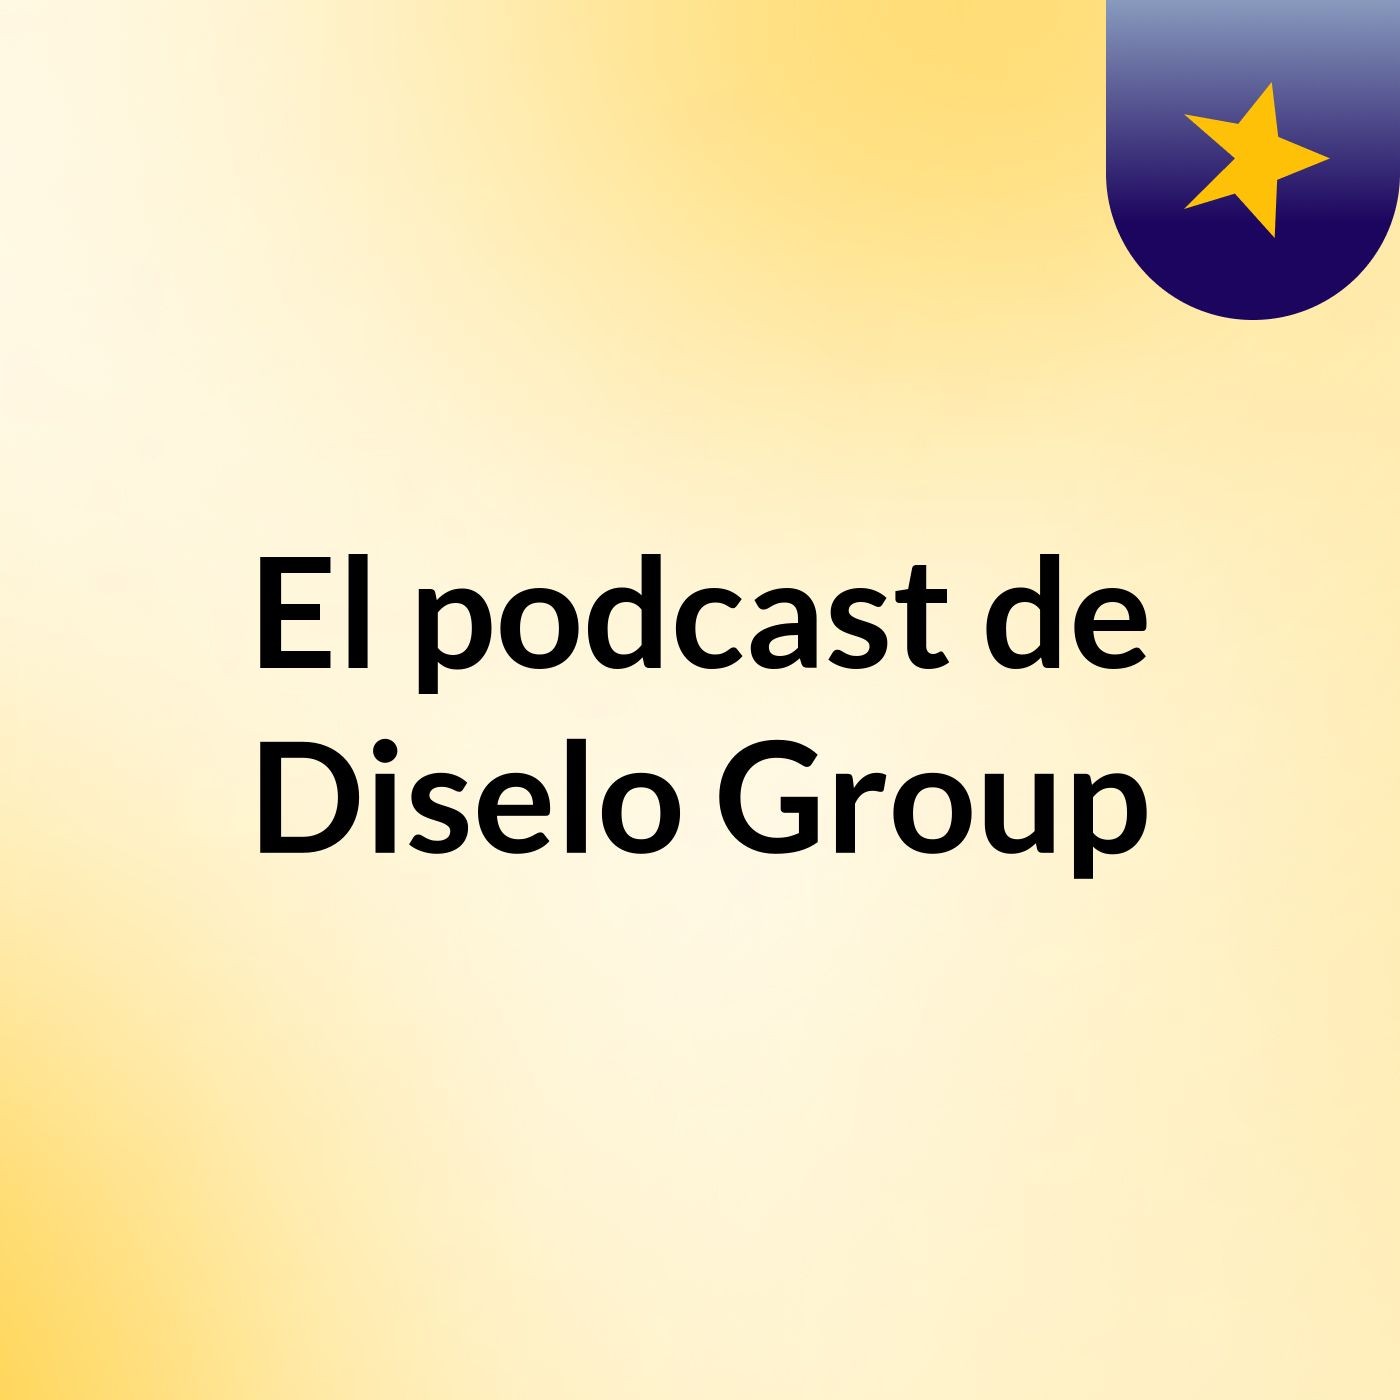 El podcast de Diselo Group